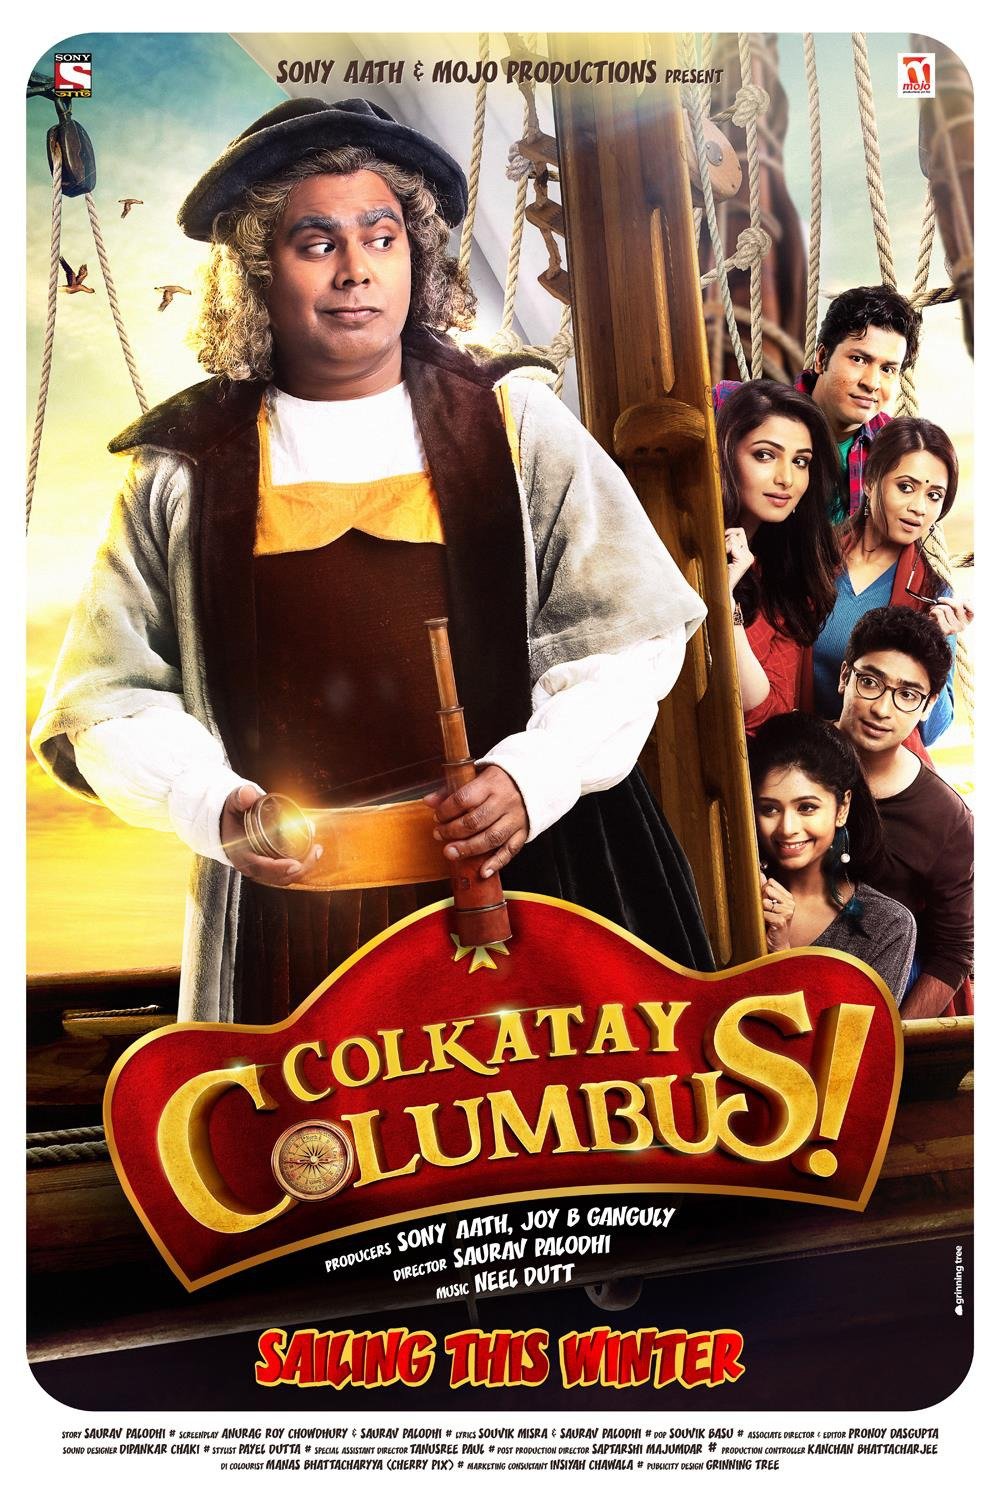 Bengali poster of the movie Colkatay Columbus